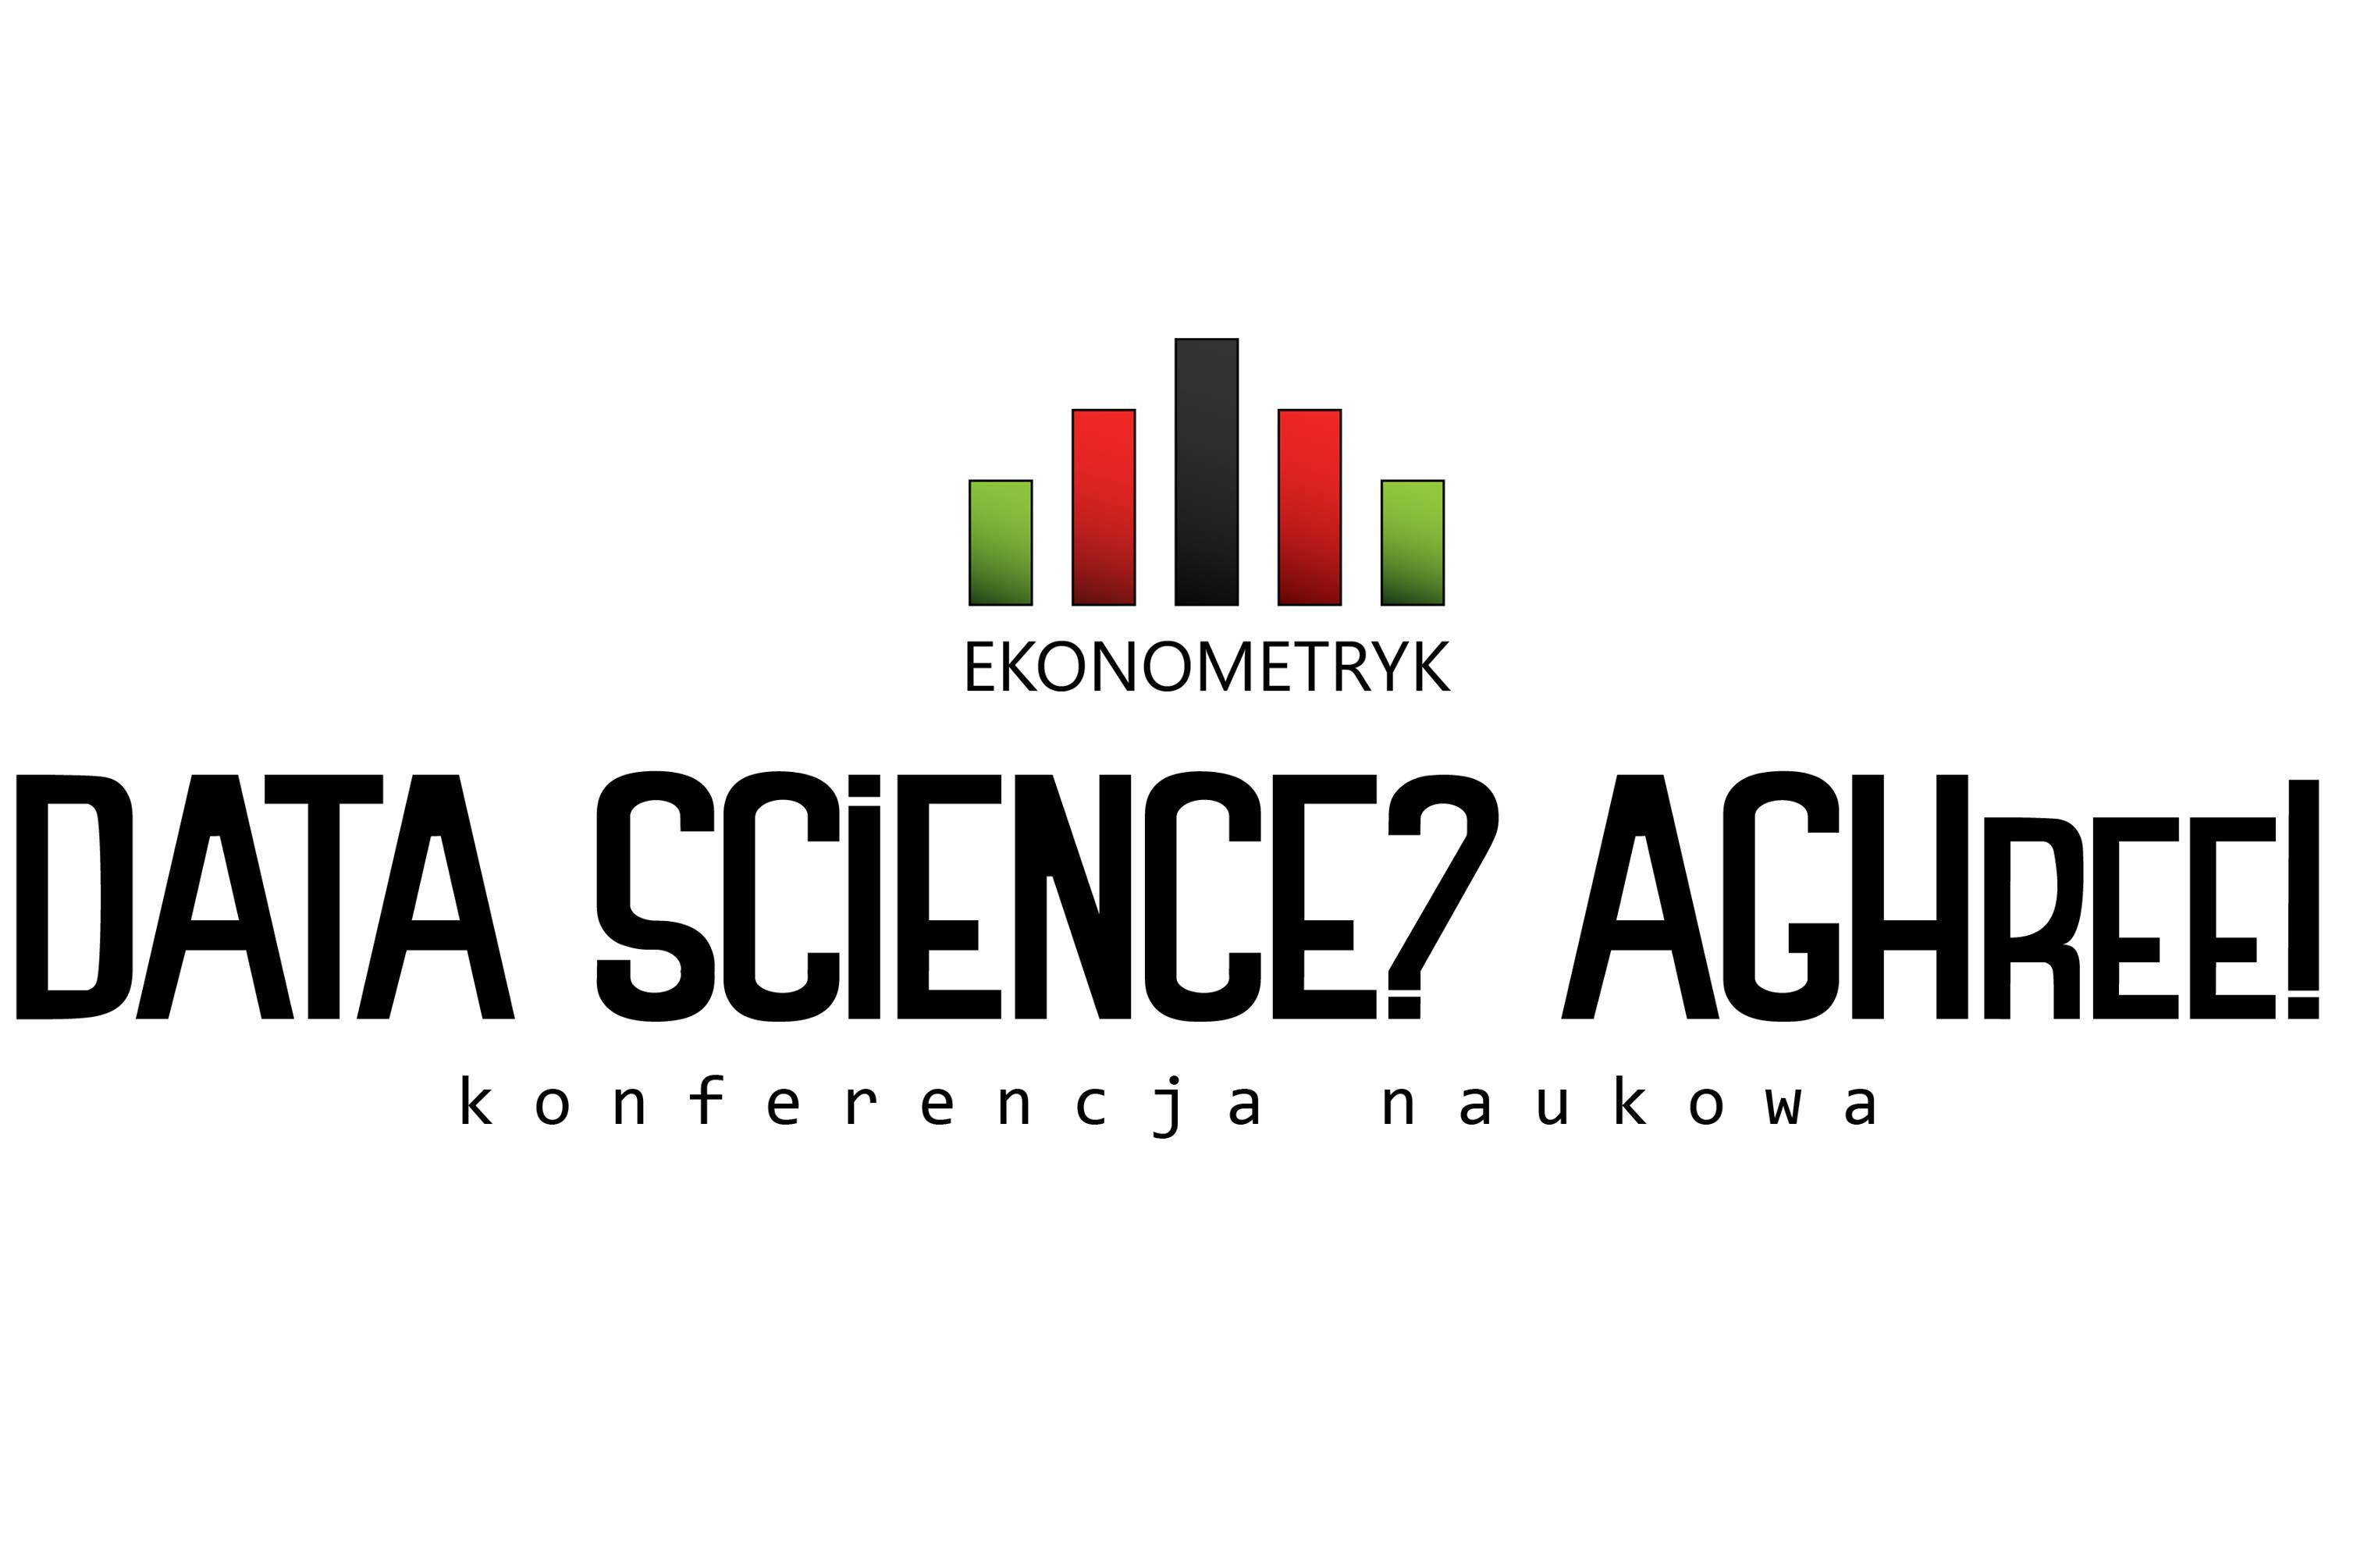 Konferencja Data Science? AGHree! 2019